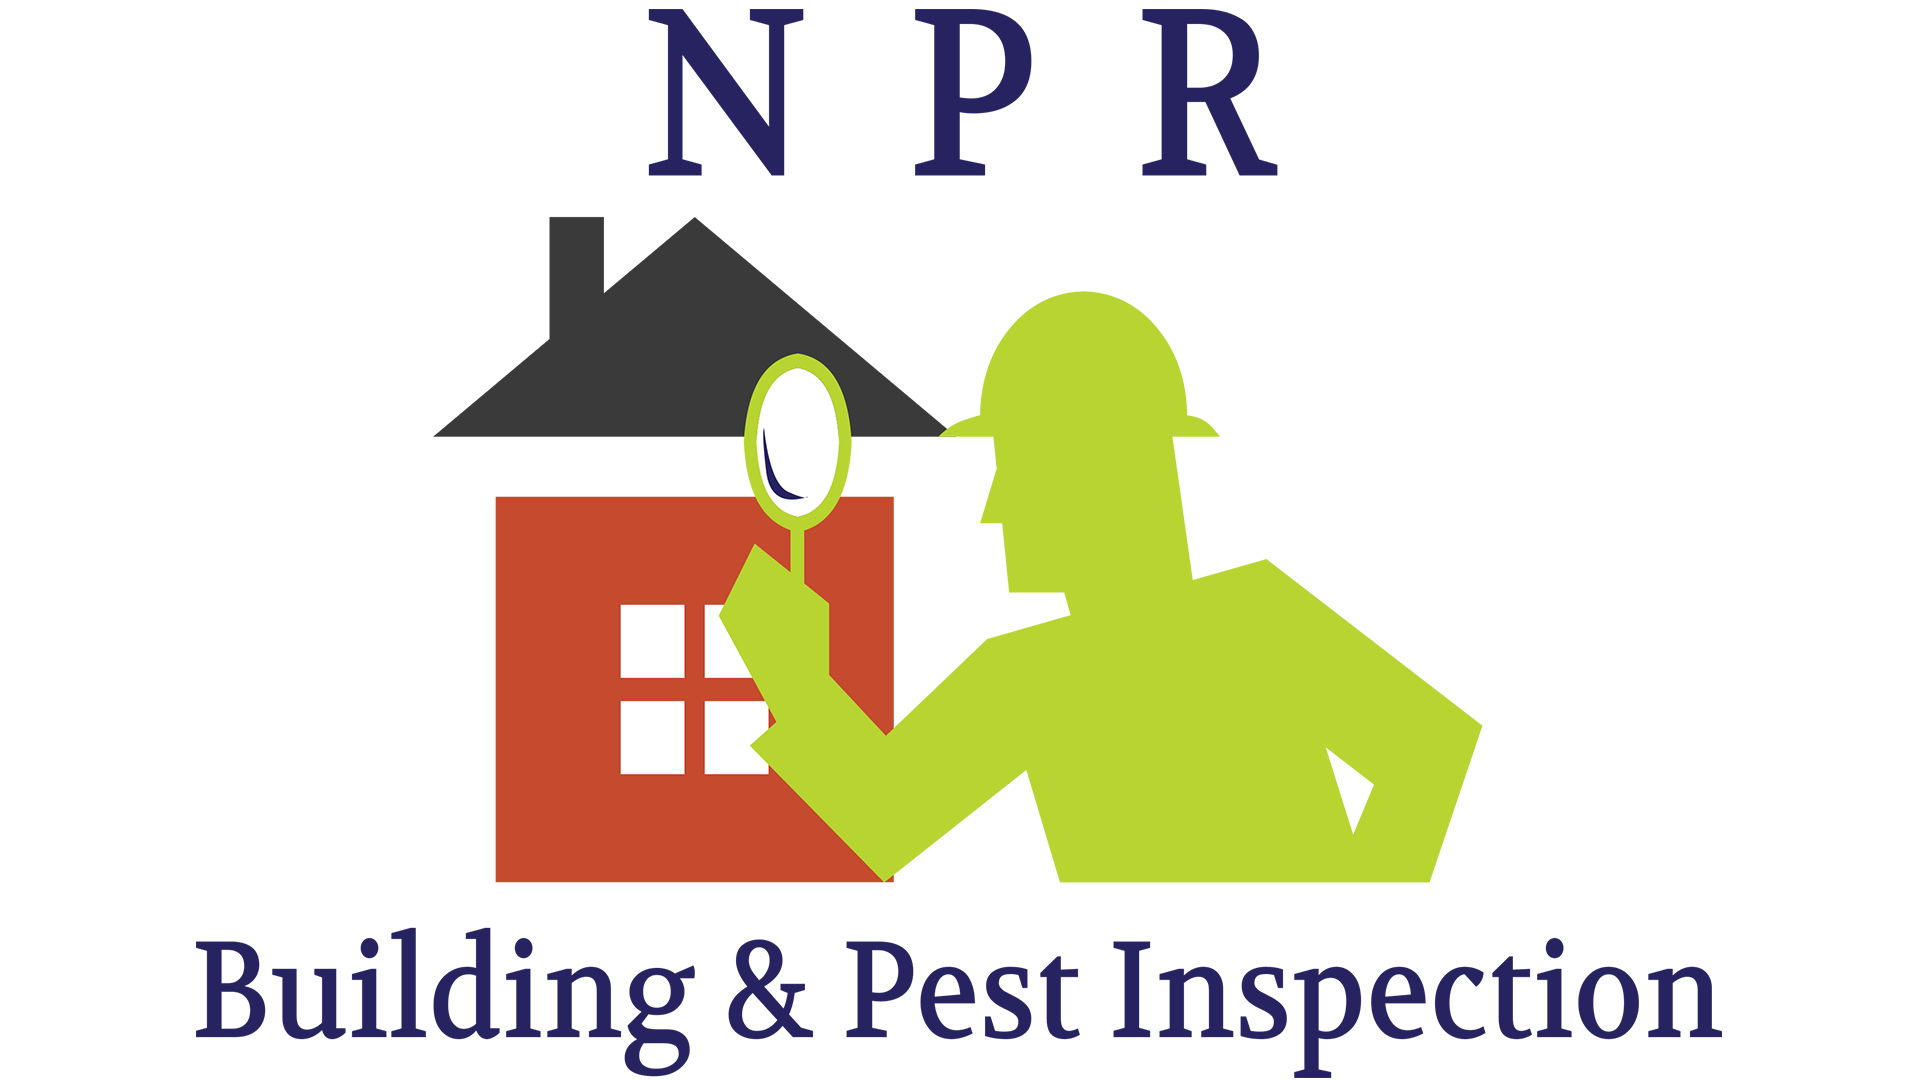 NPR building and pest inspection